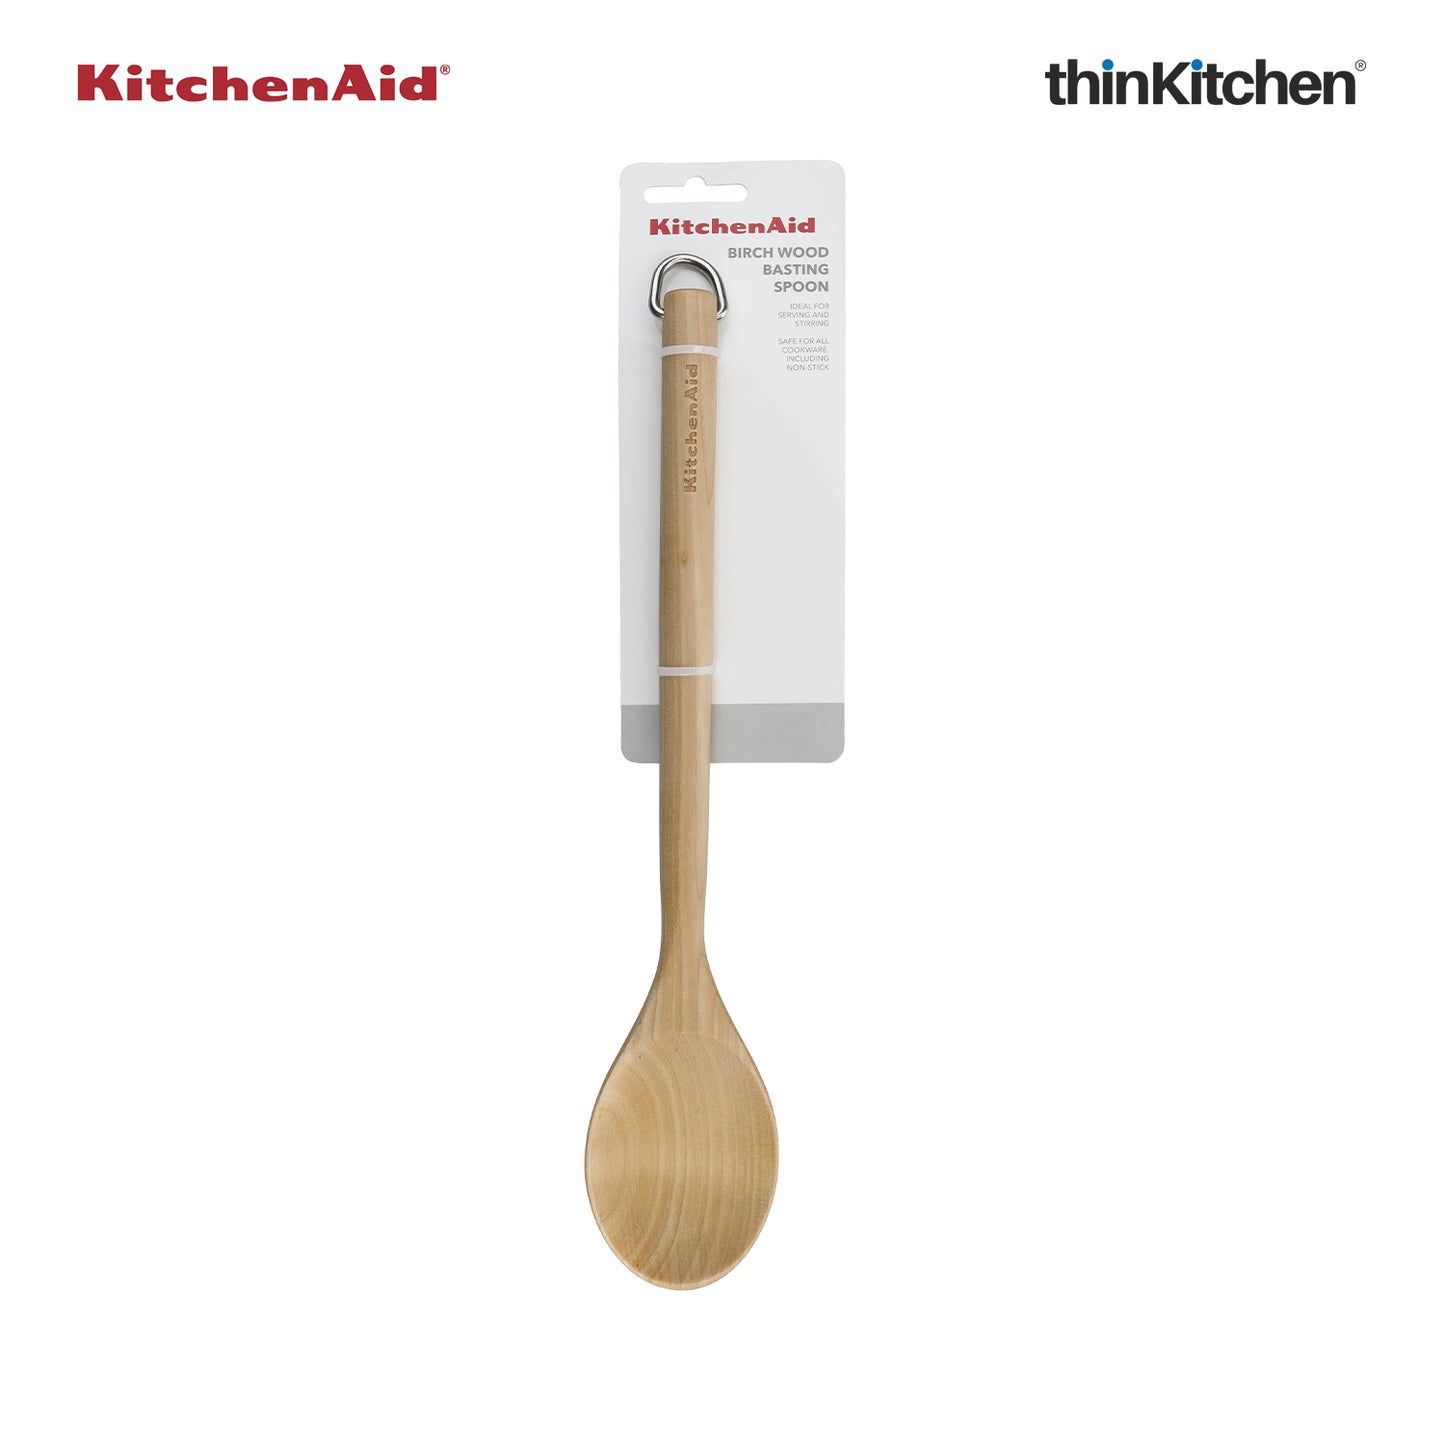 Kitchenaid Birchwood Slotted Spoon Stir Serve Spoon